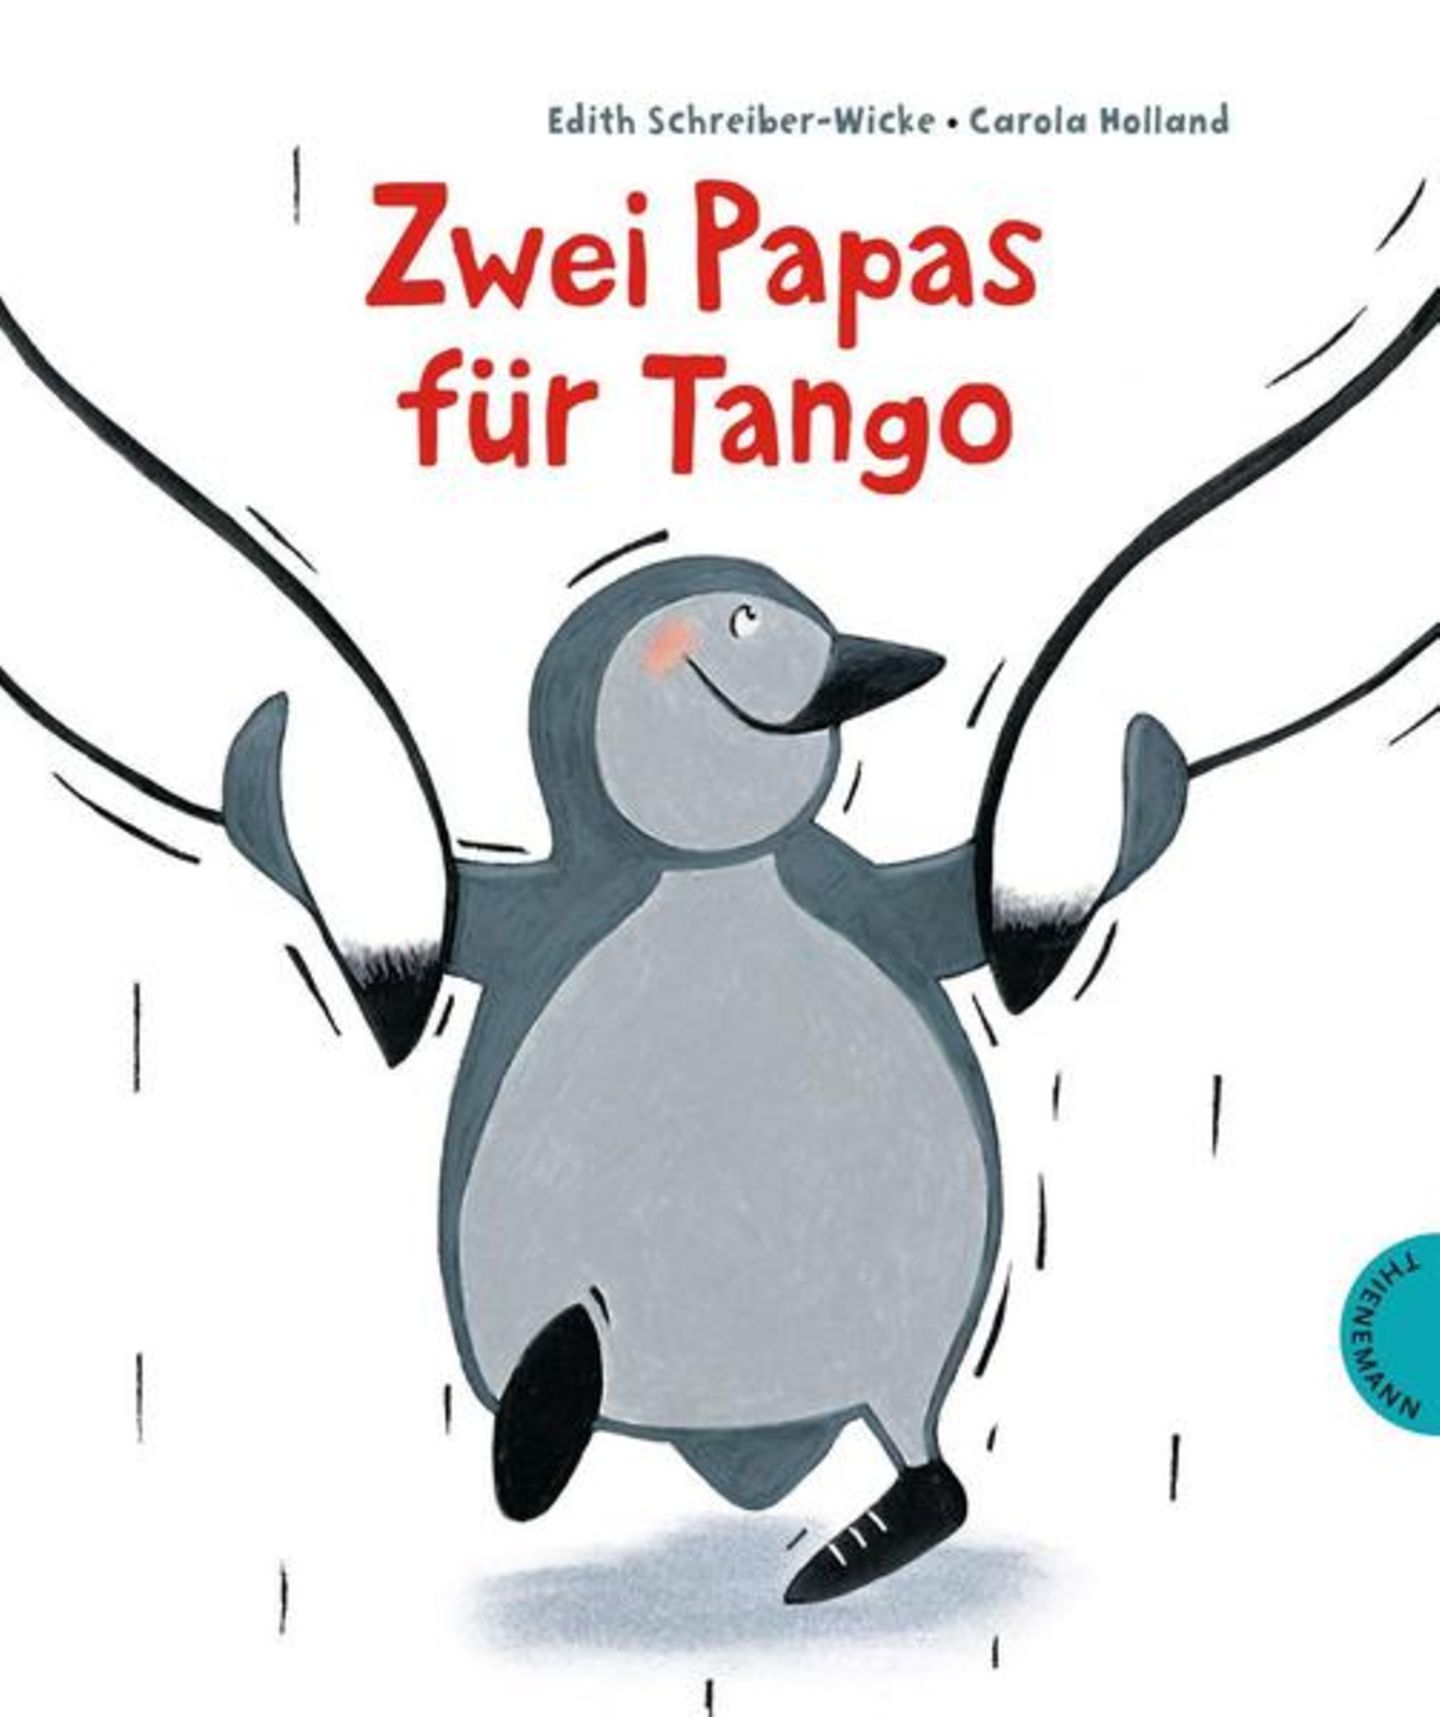 Buch-Cover: "Zwei Papas für Tango"